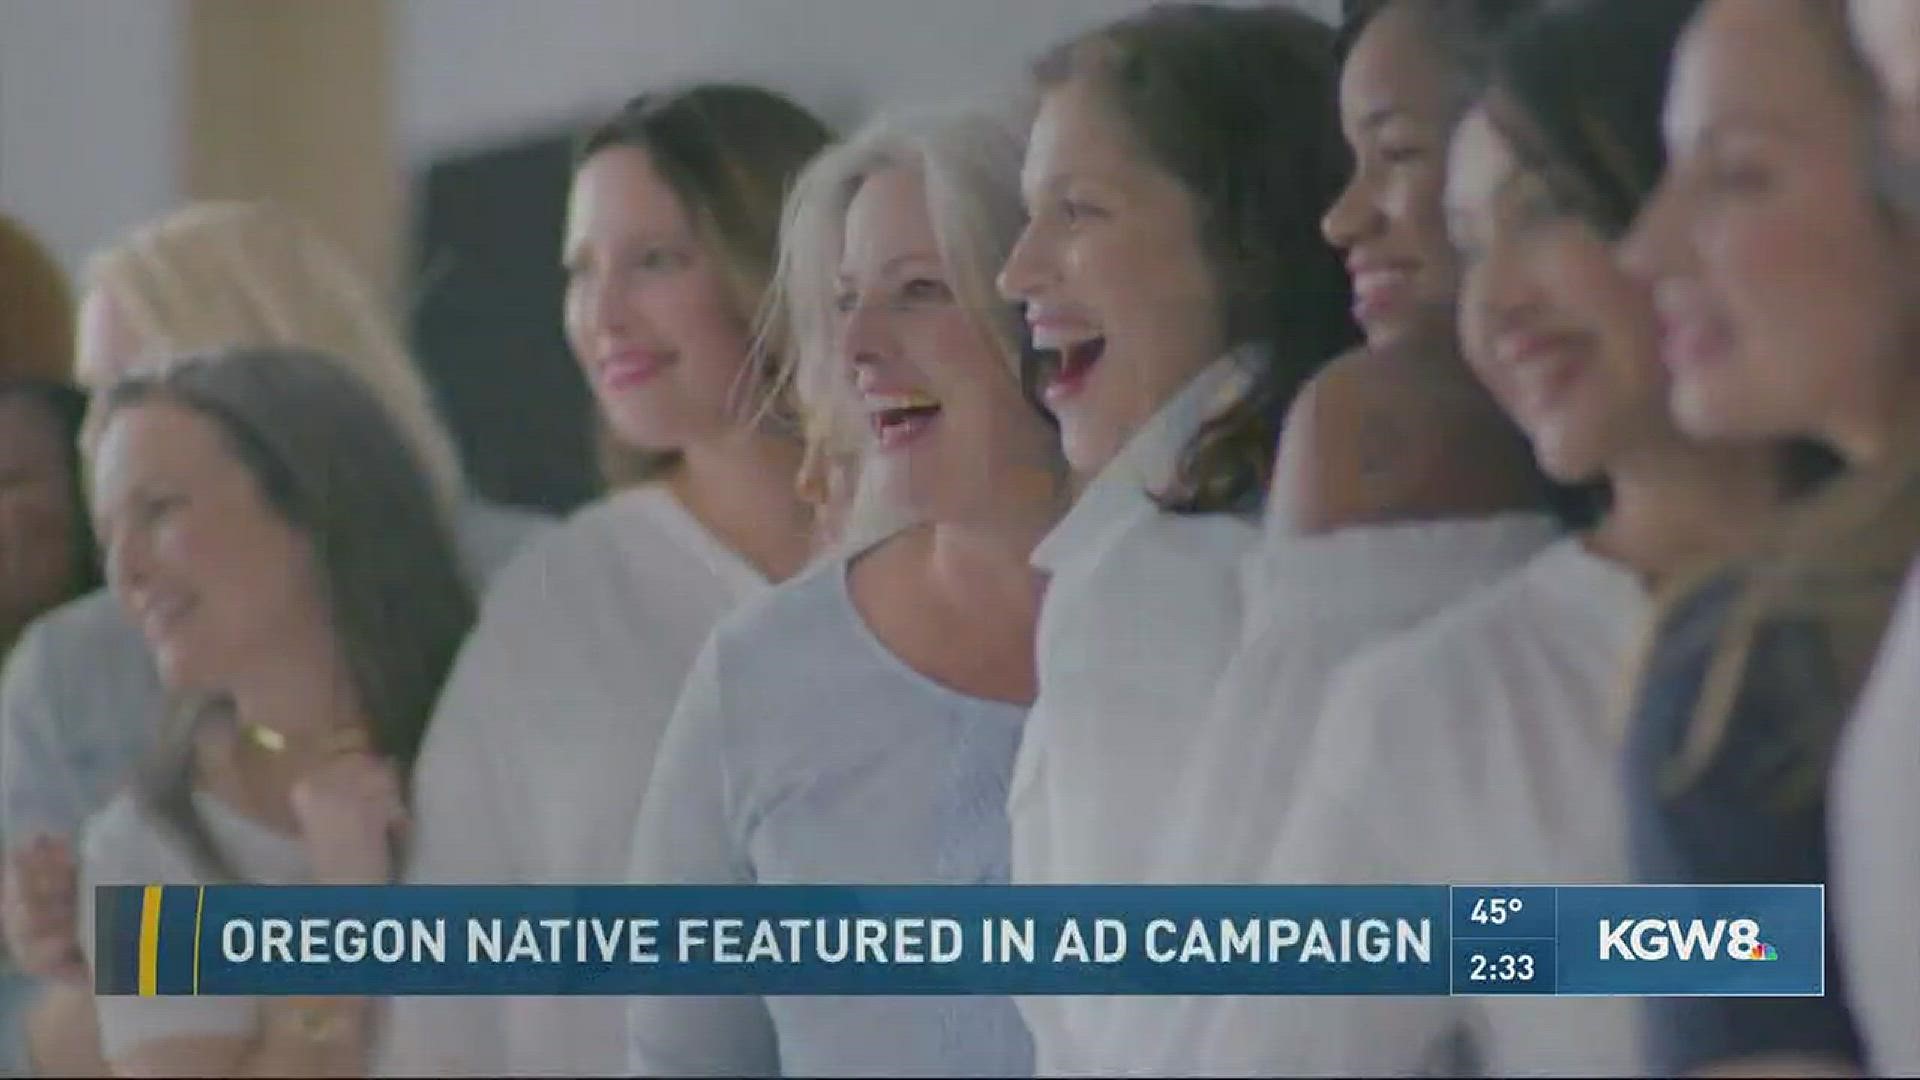 Oregon native featured in ad campaign